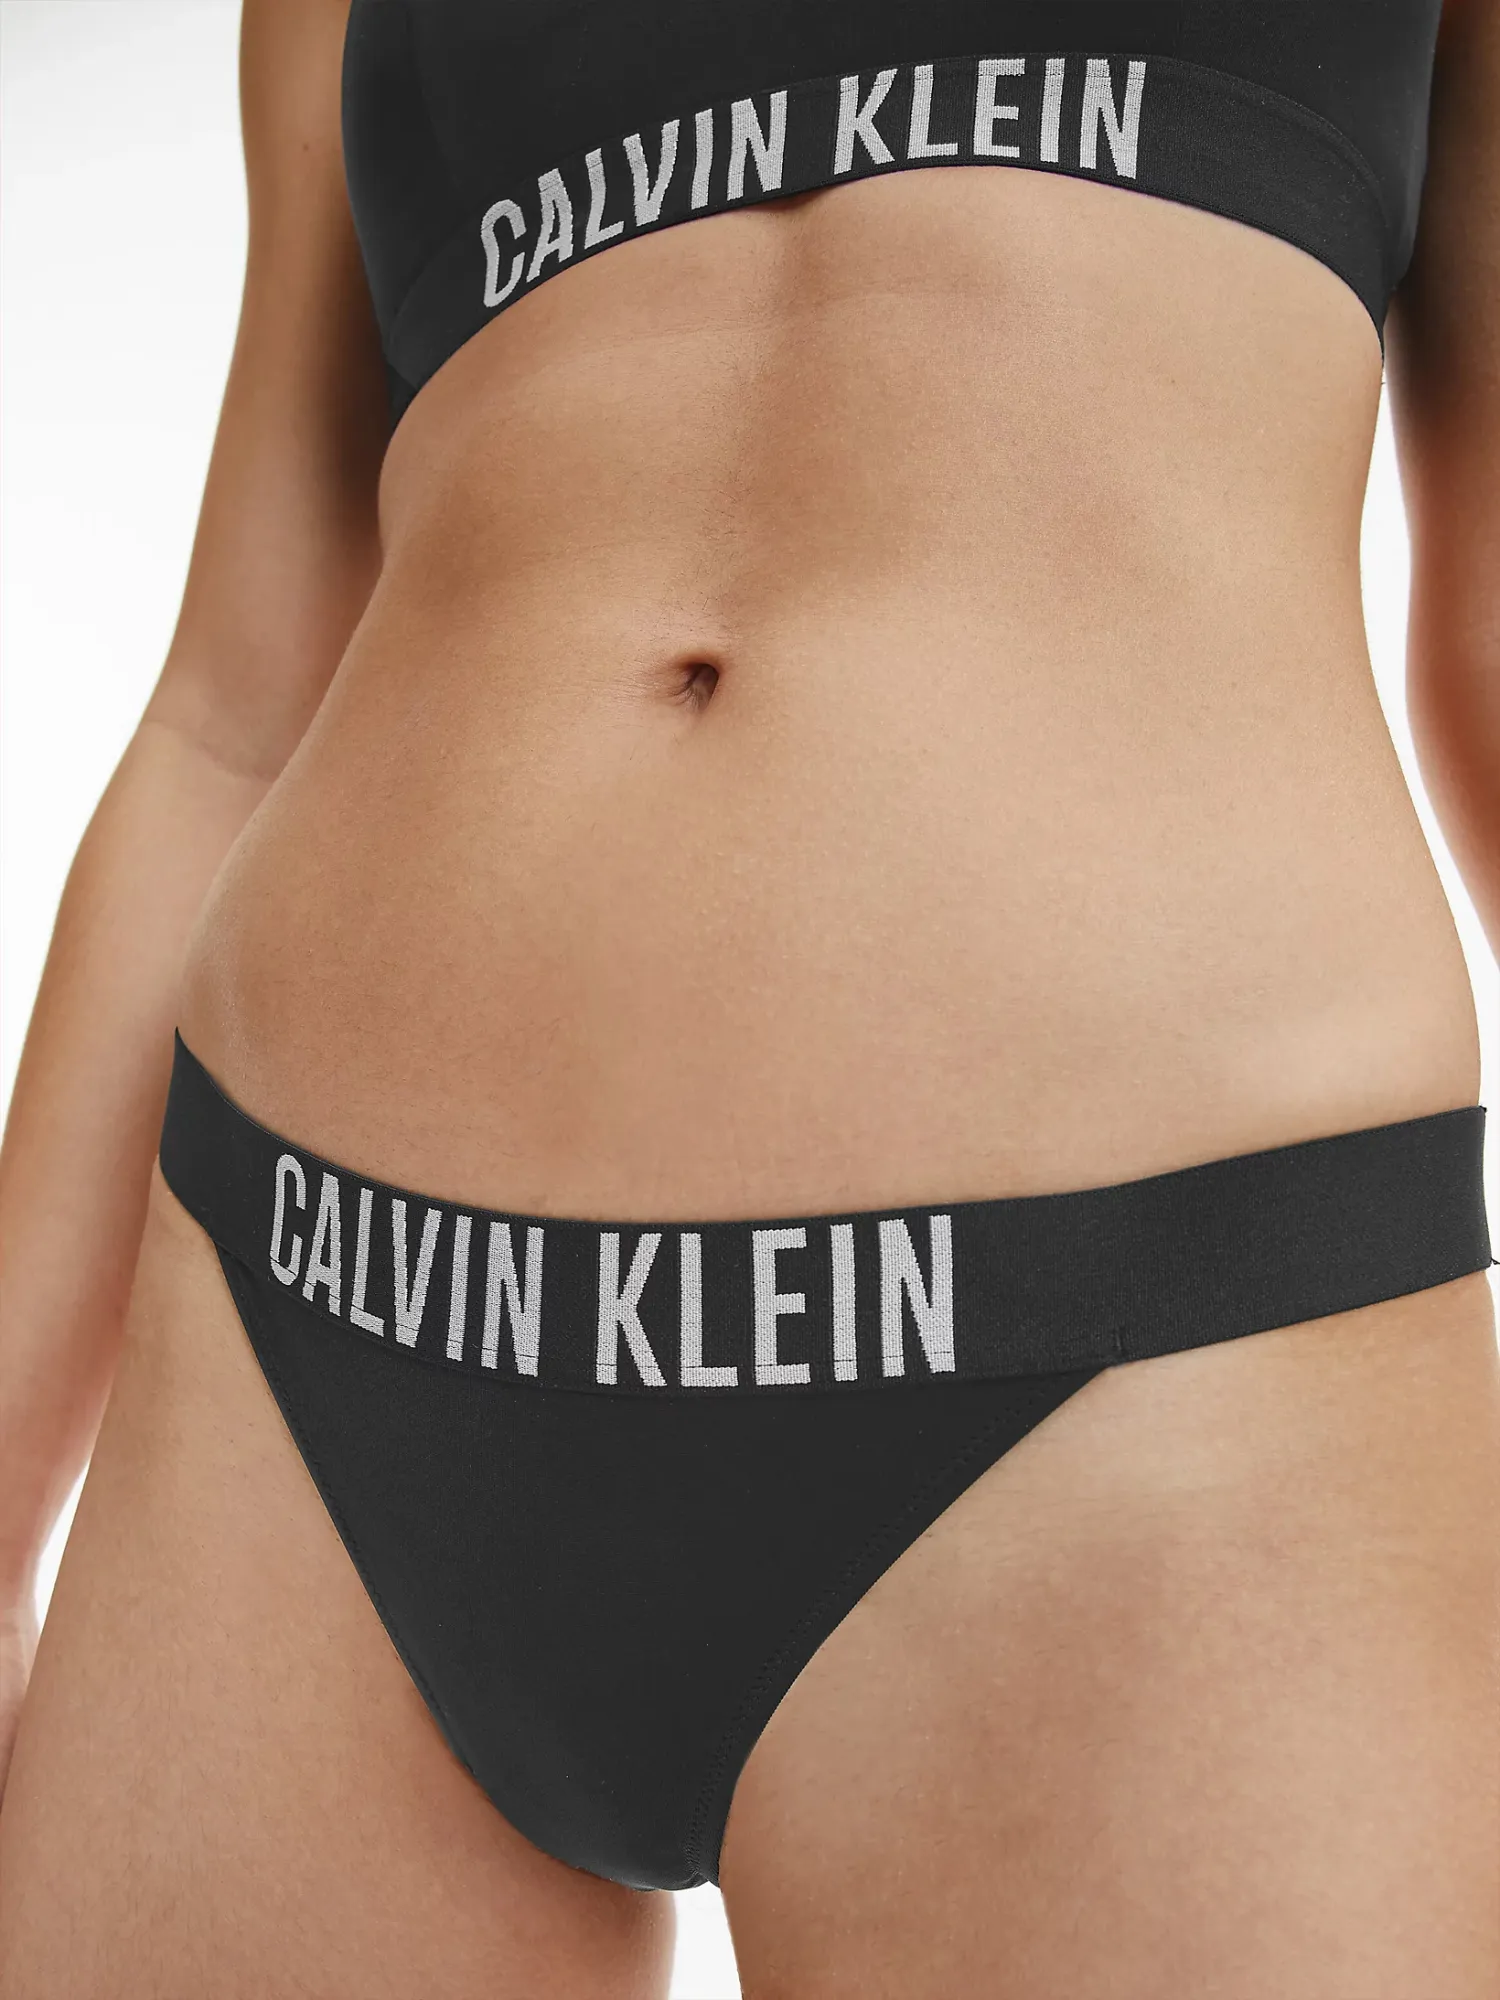 KLEIN Brazilian Bikini Bottom Intense Power | Choice+Attitude